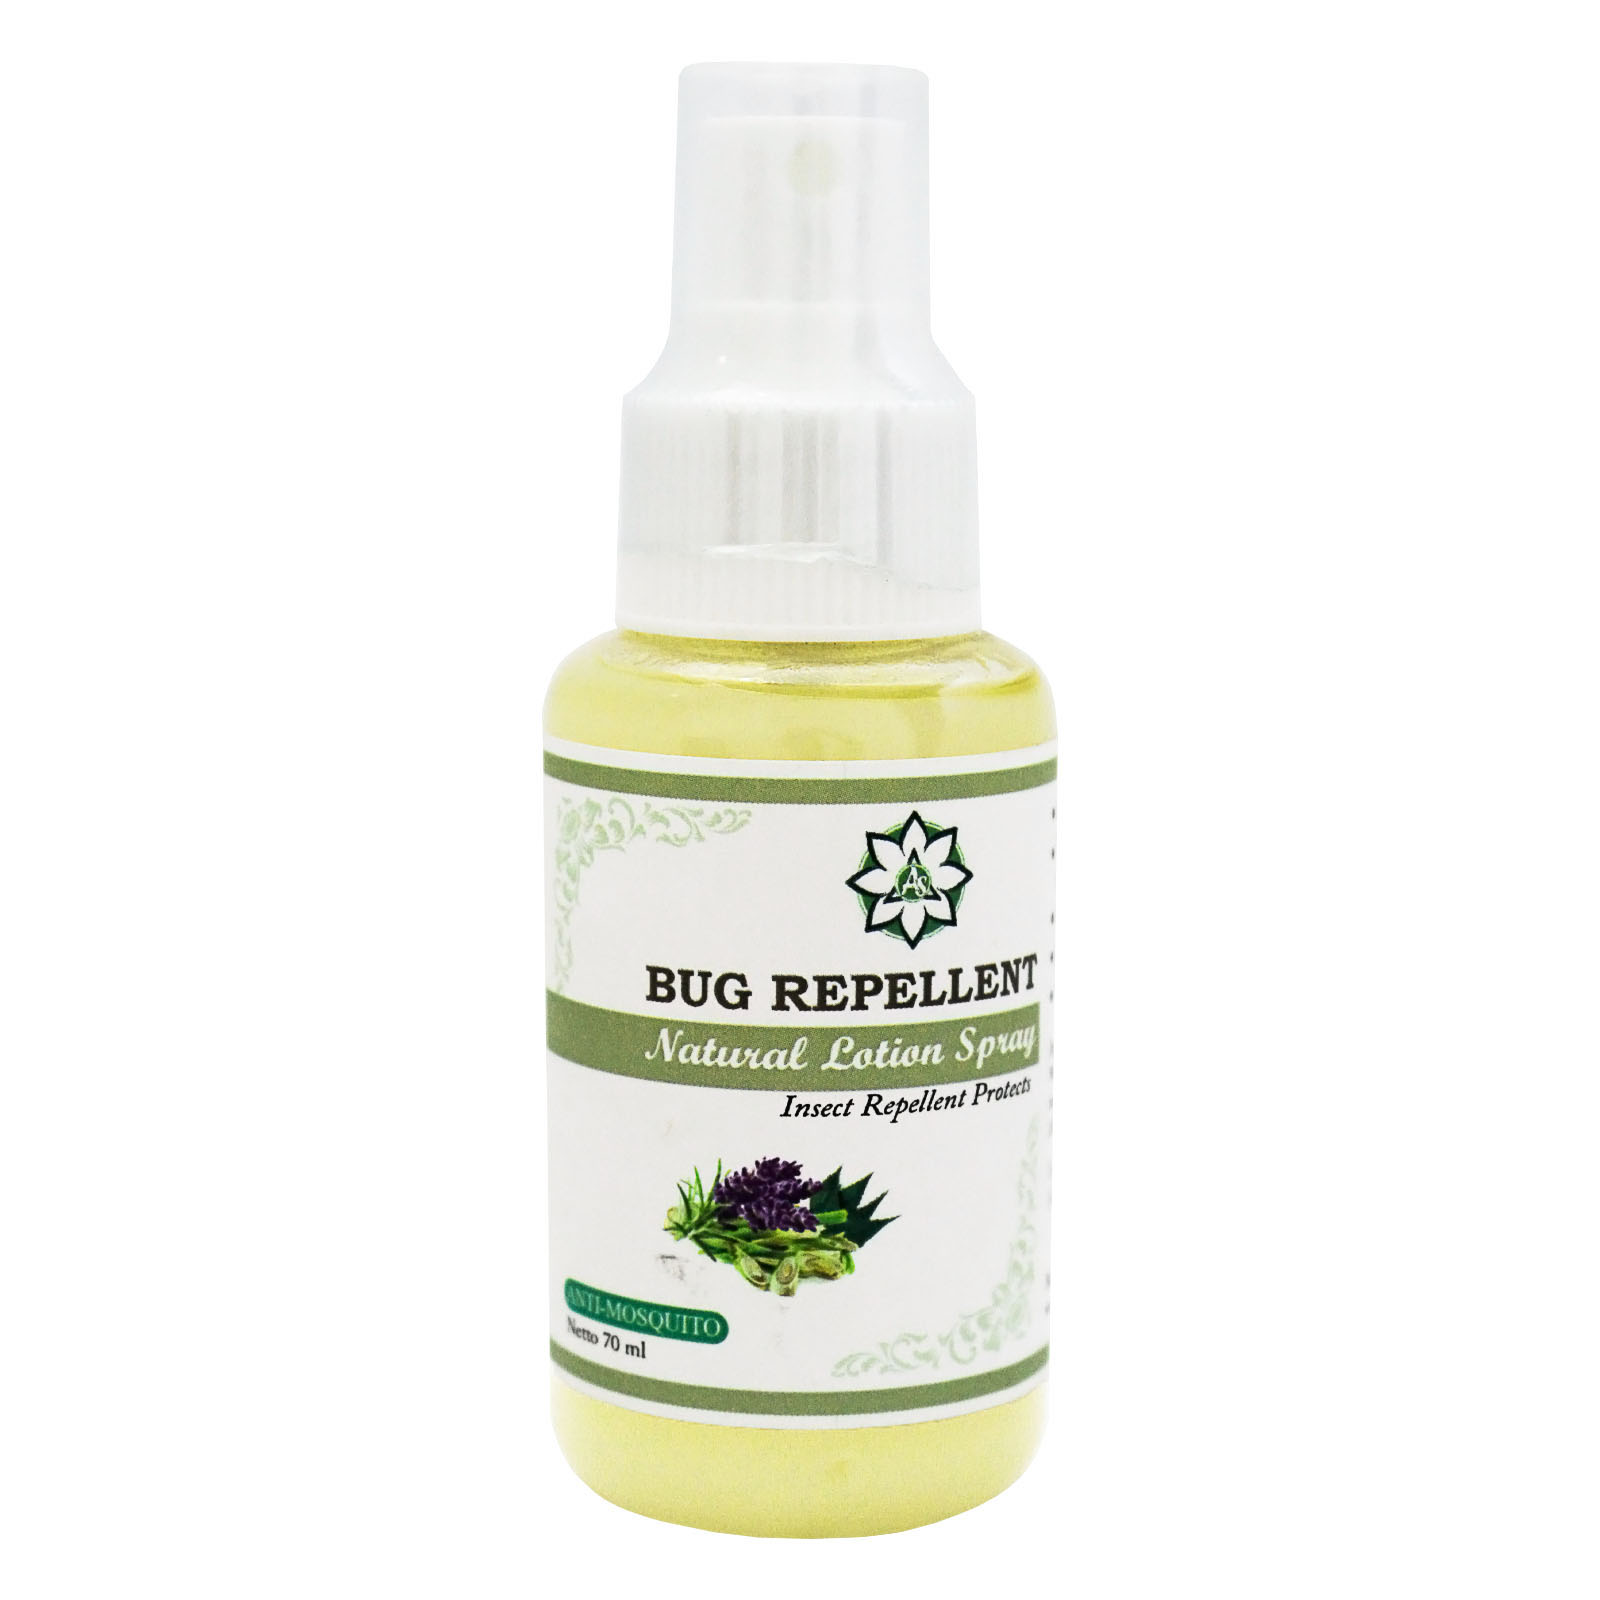  Anne jero магазин репеллент спрей Bug Repellent натуральный лосьон спрей 70ml за границей прямая поставка товар 